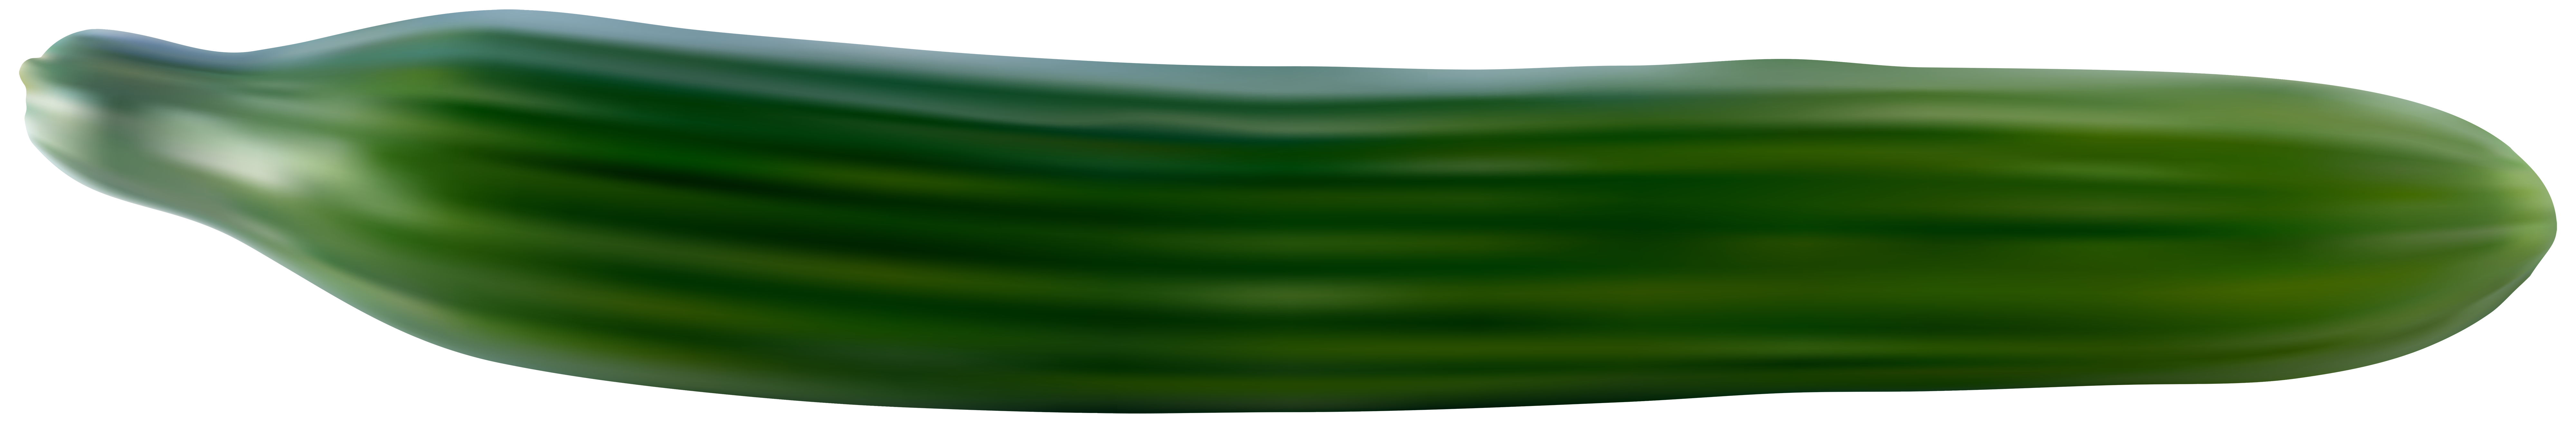 Single Cucumber PNG Transparent Image